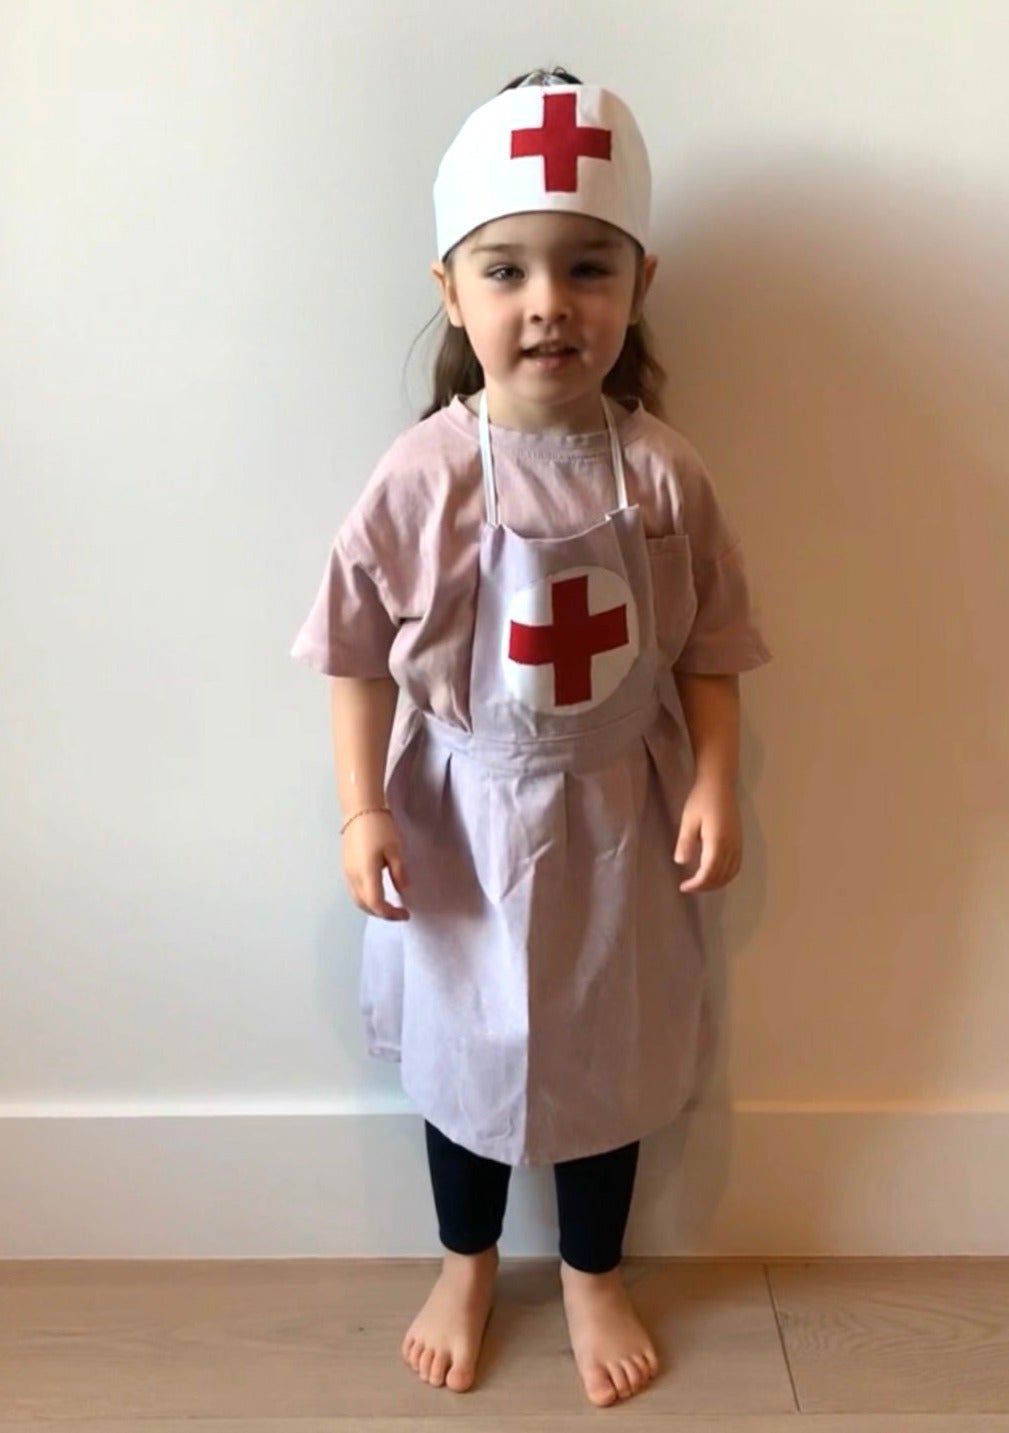 Girl wearing handmade nurse dress and hat playing dress up